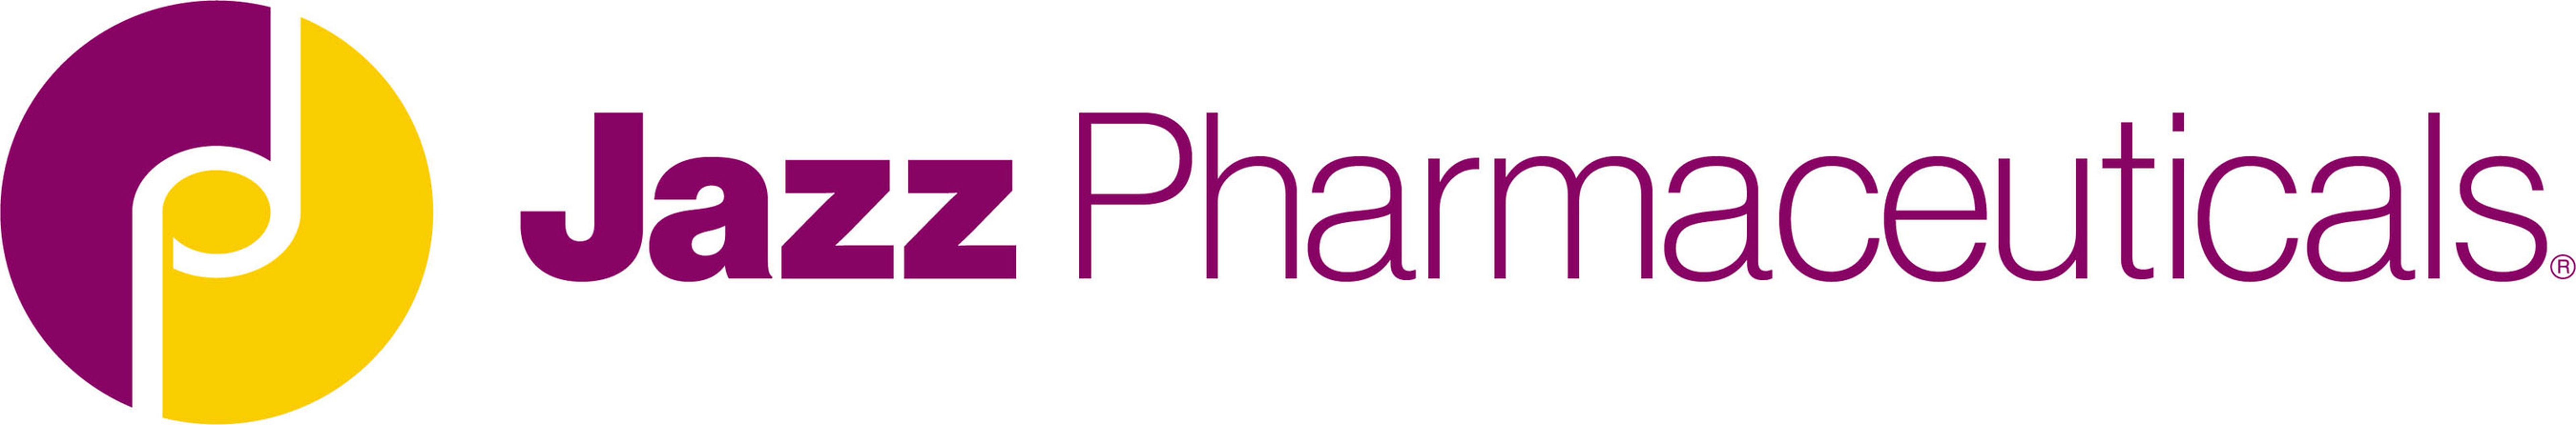 Jazz Pharma Reports Q1 Epidiolex Sales Increased 6% To $157.9M YoY